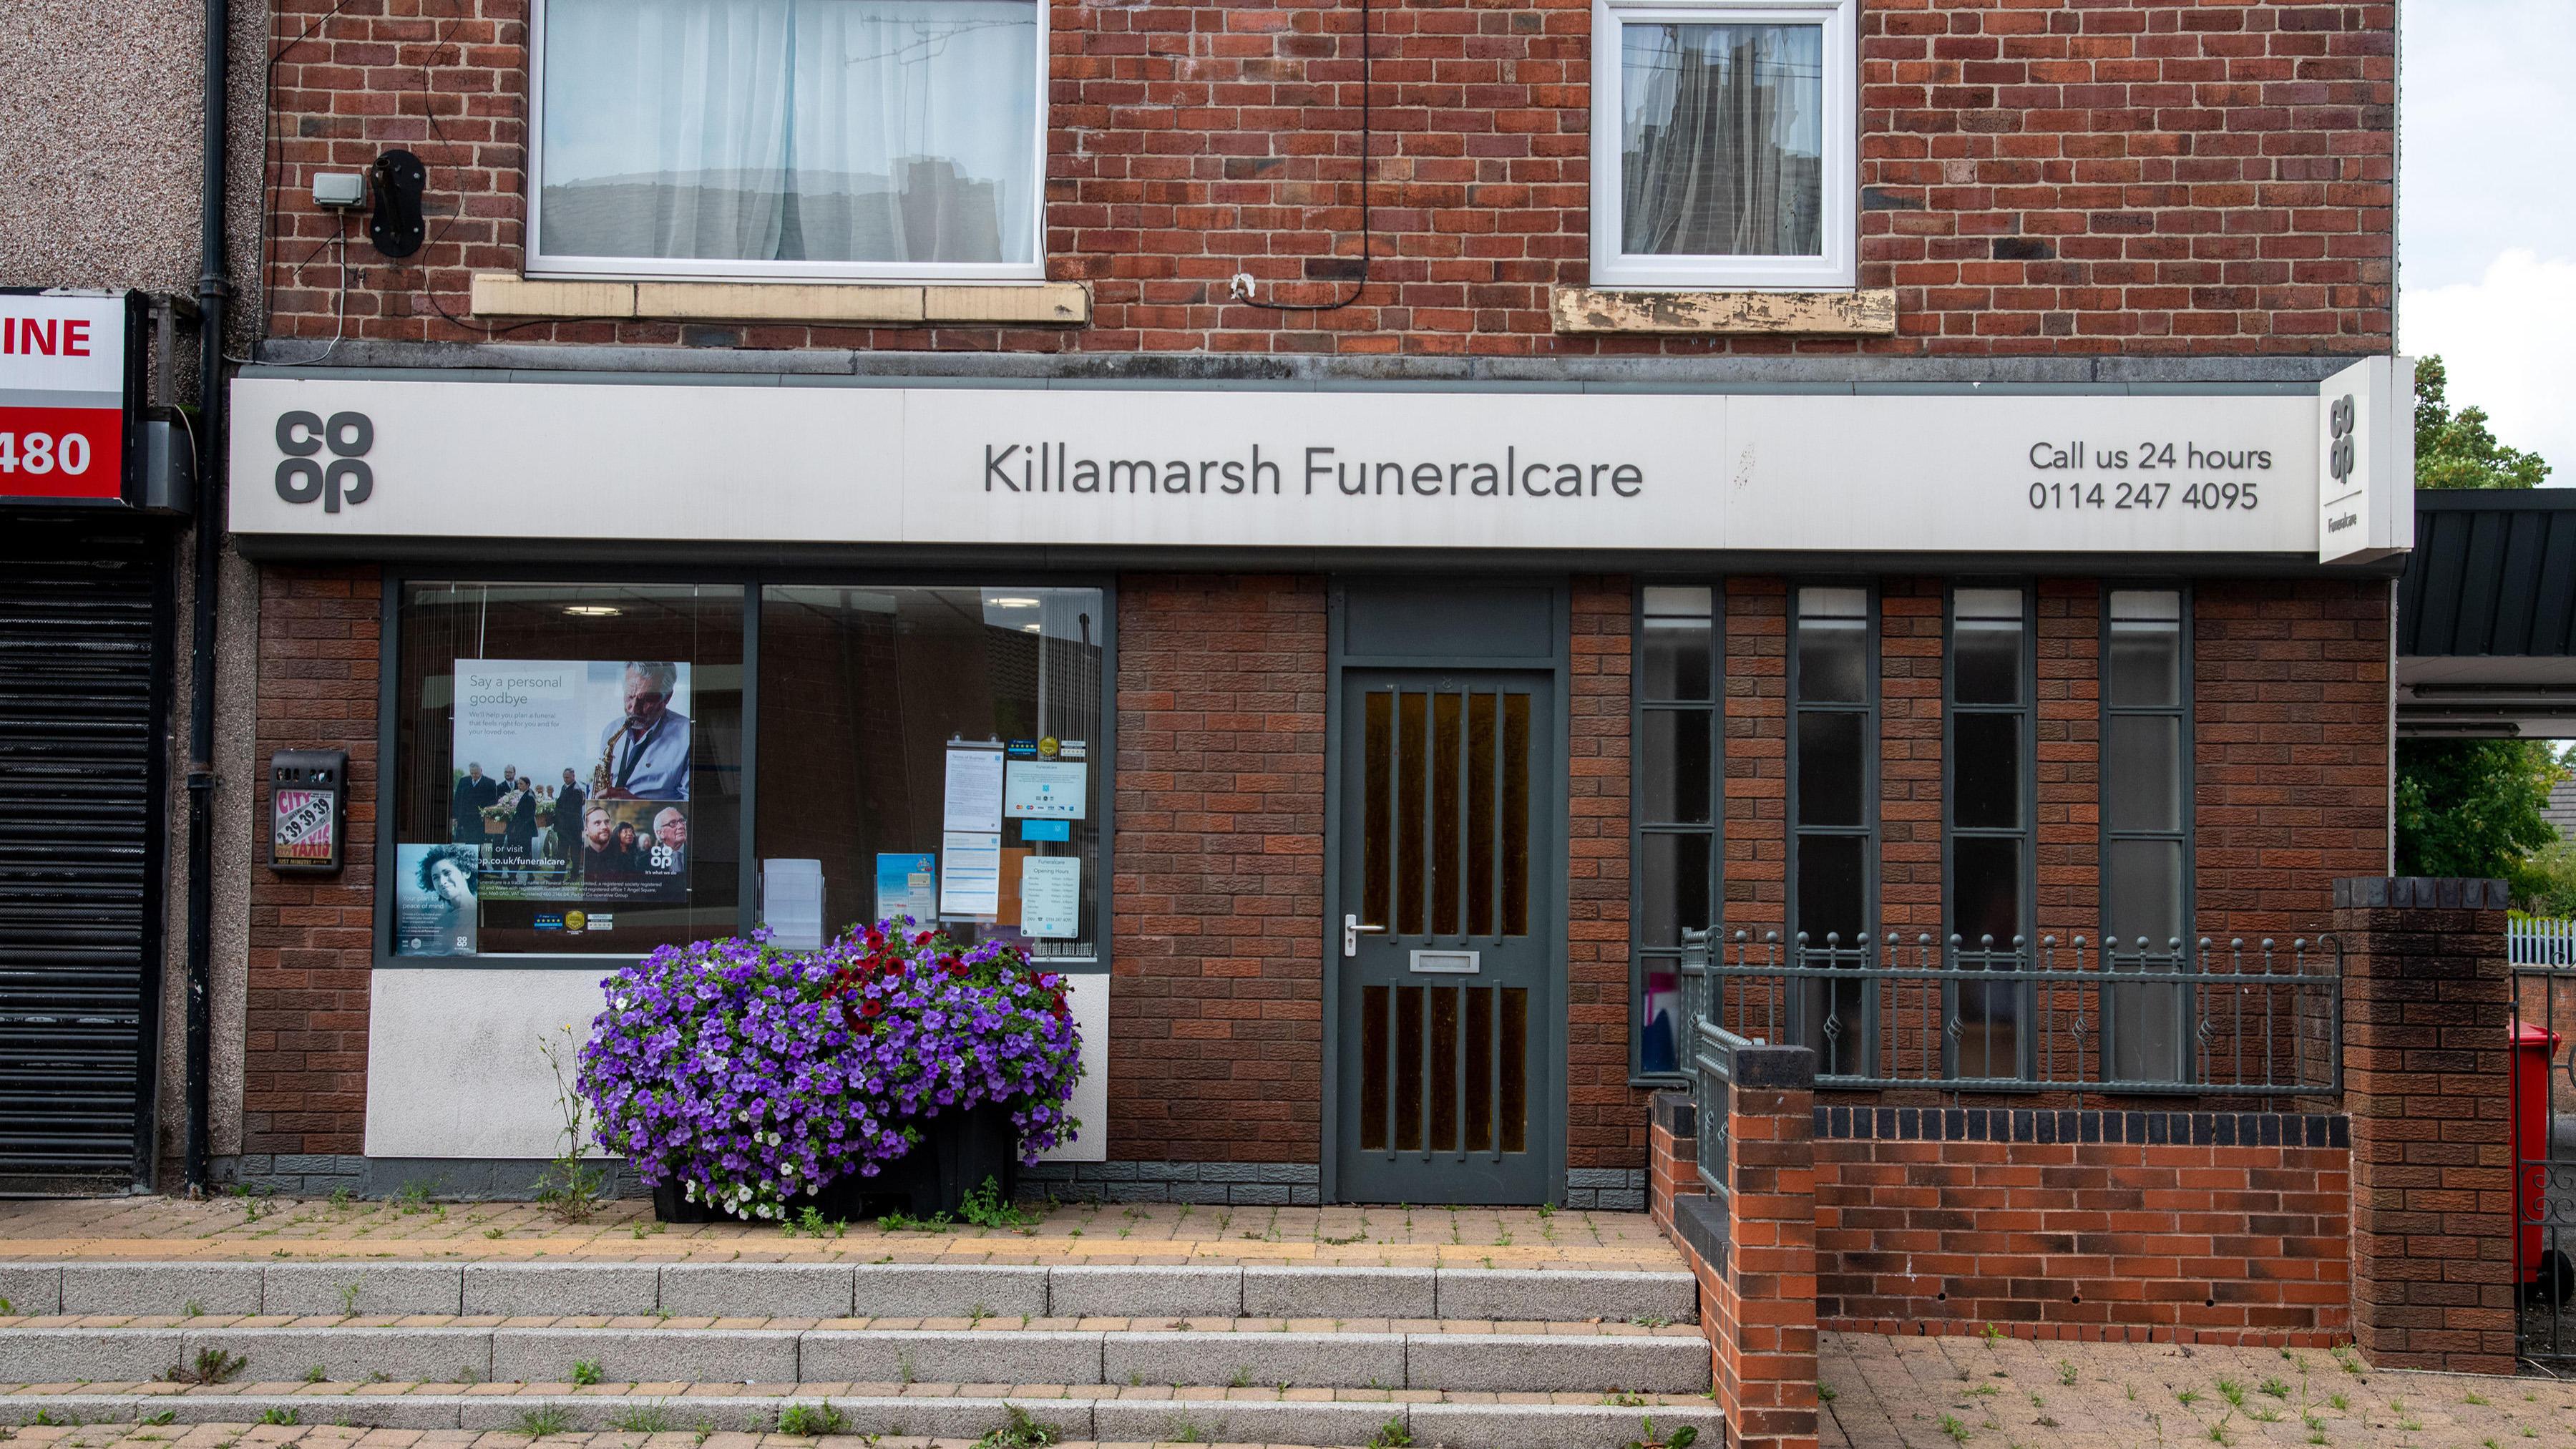 Images Killamarsh Funeralcare